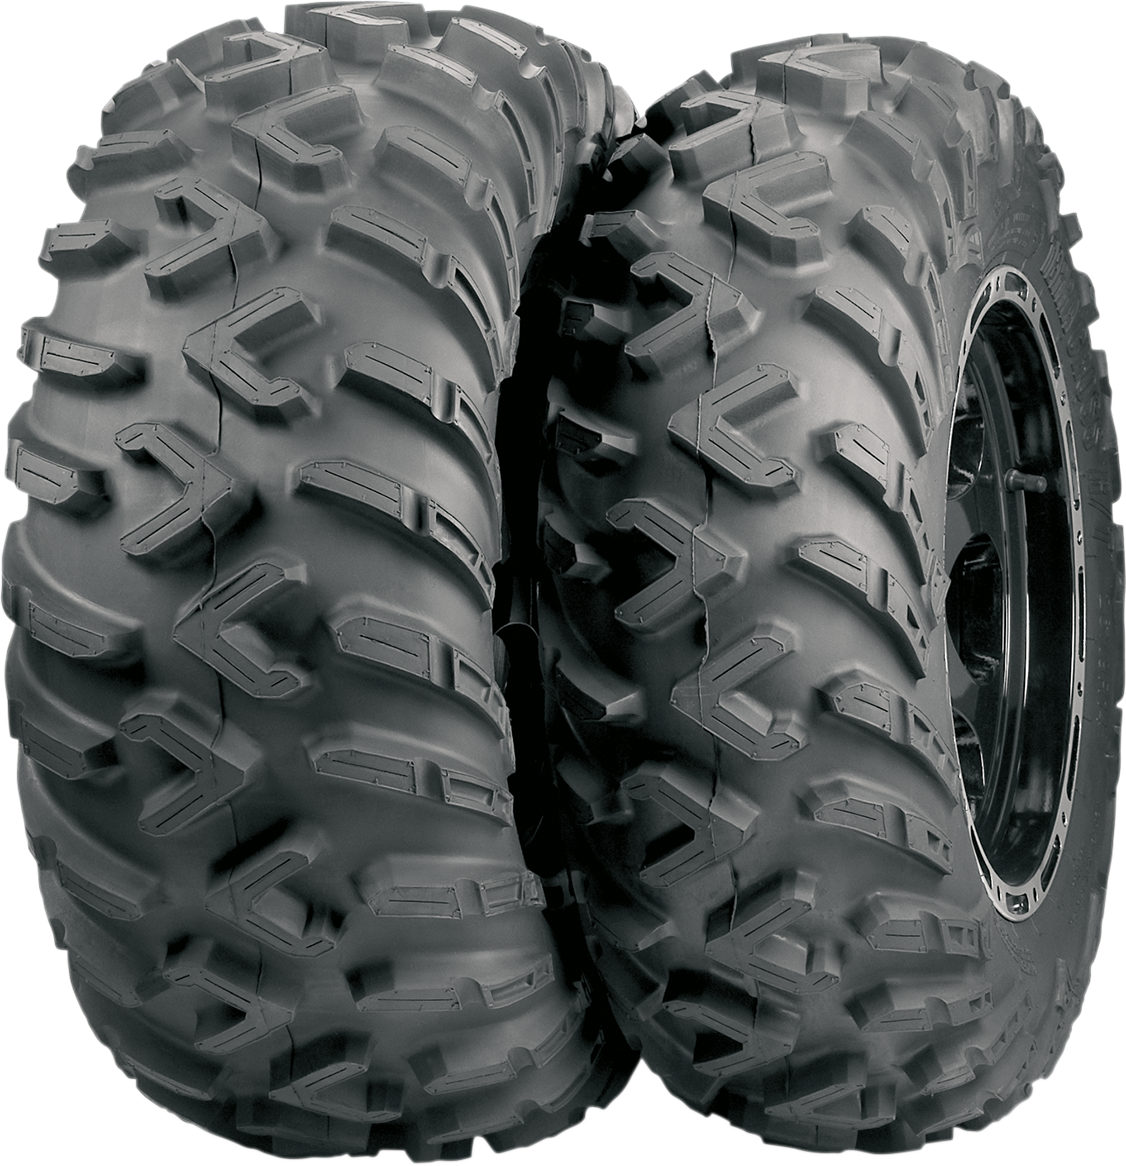 ITP Tire - Terracross R/T - Rear - 26x11R12 - 6 Ply 560476